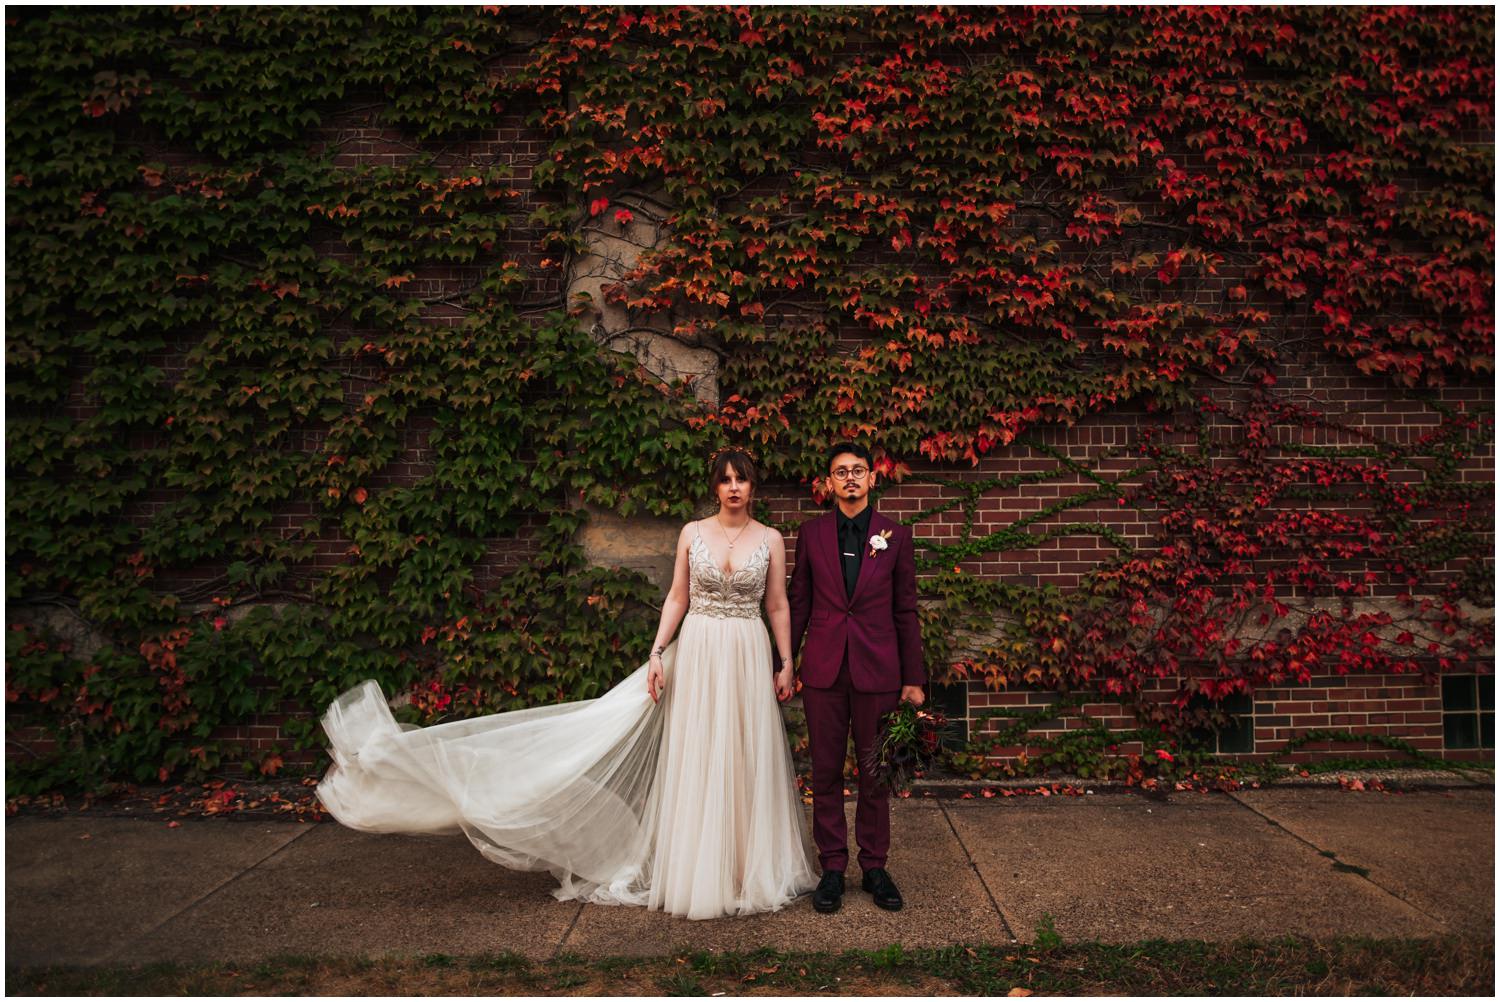 Ovation Chicago Wedding Photos - Rolls Royce Bride and groom portraits Ivy wall